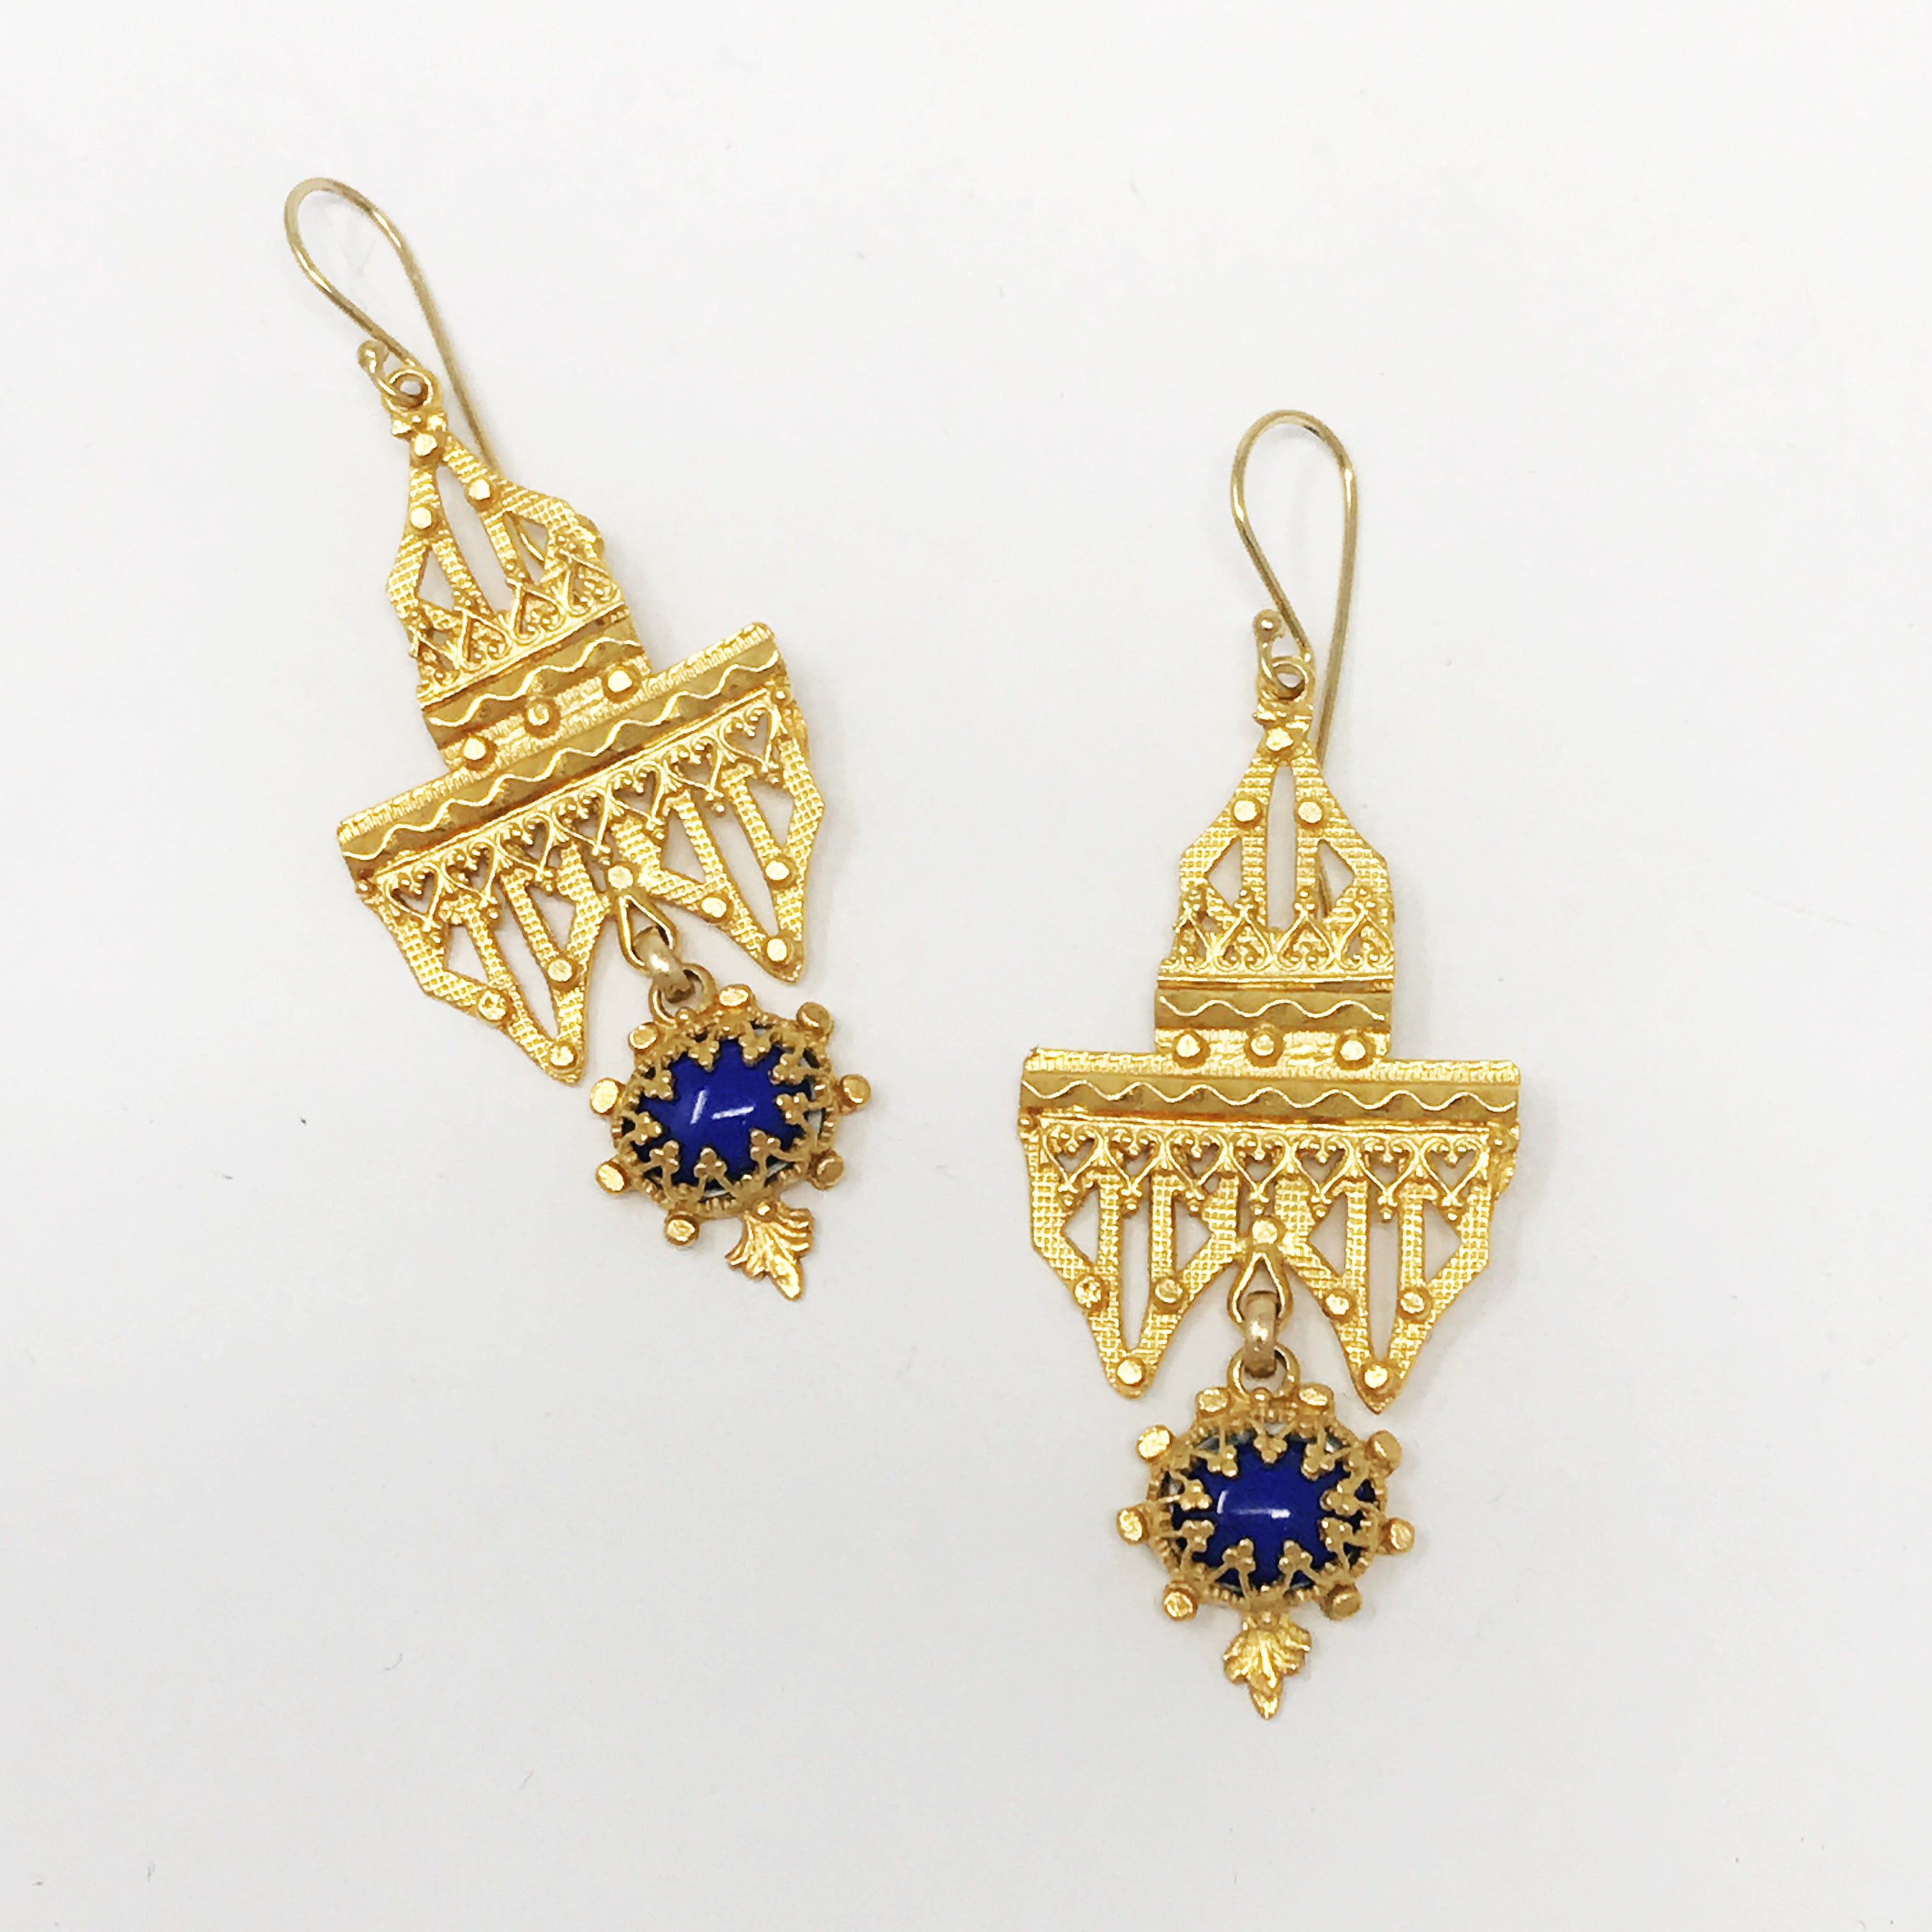 gold Vermeil earrings with blue gemstone